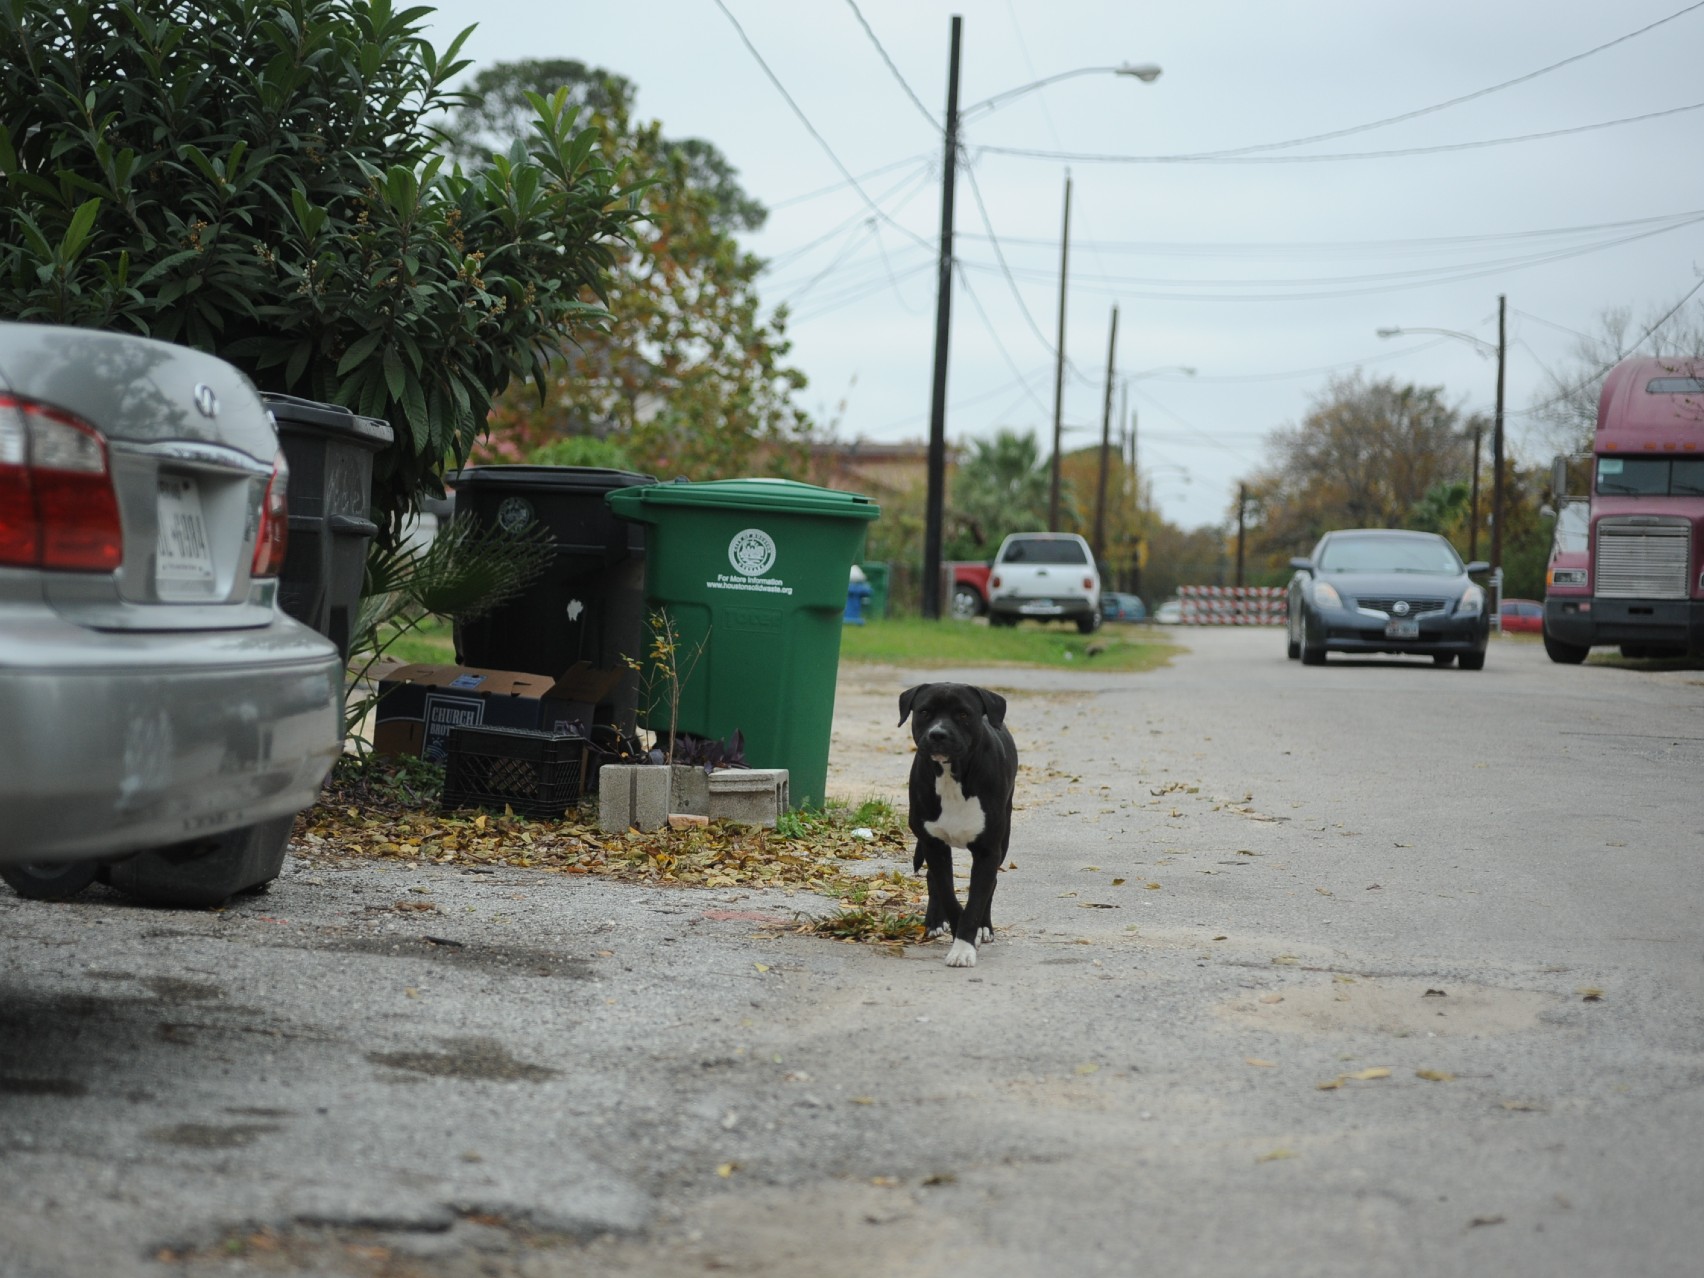 Barrio Dog Neighborhood Advocates